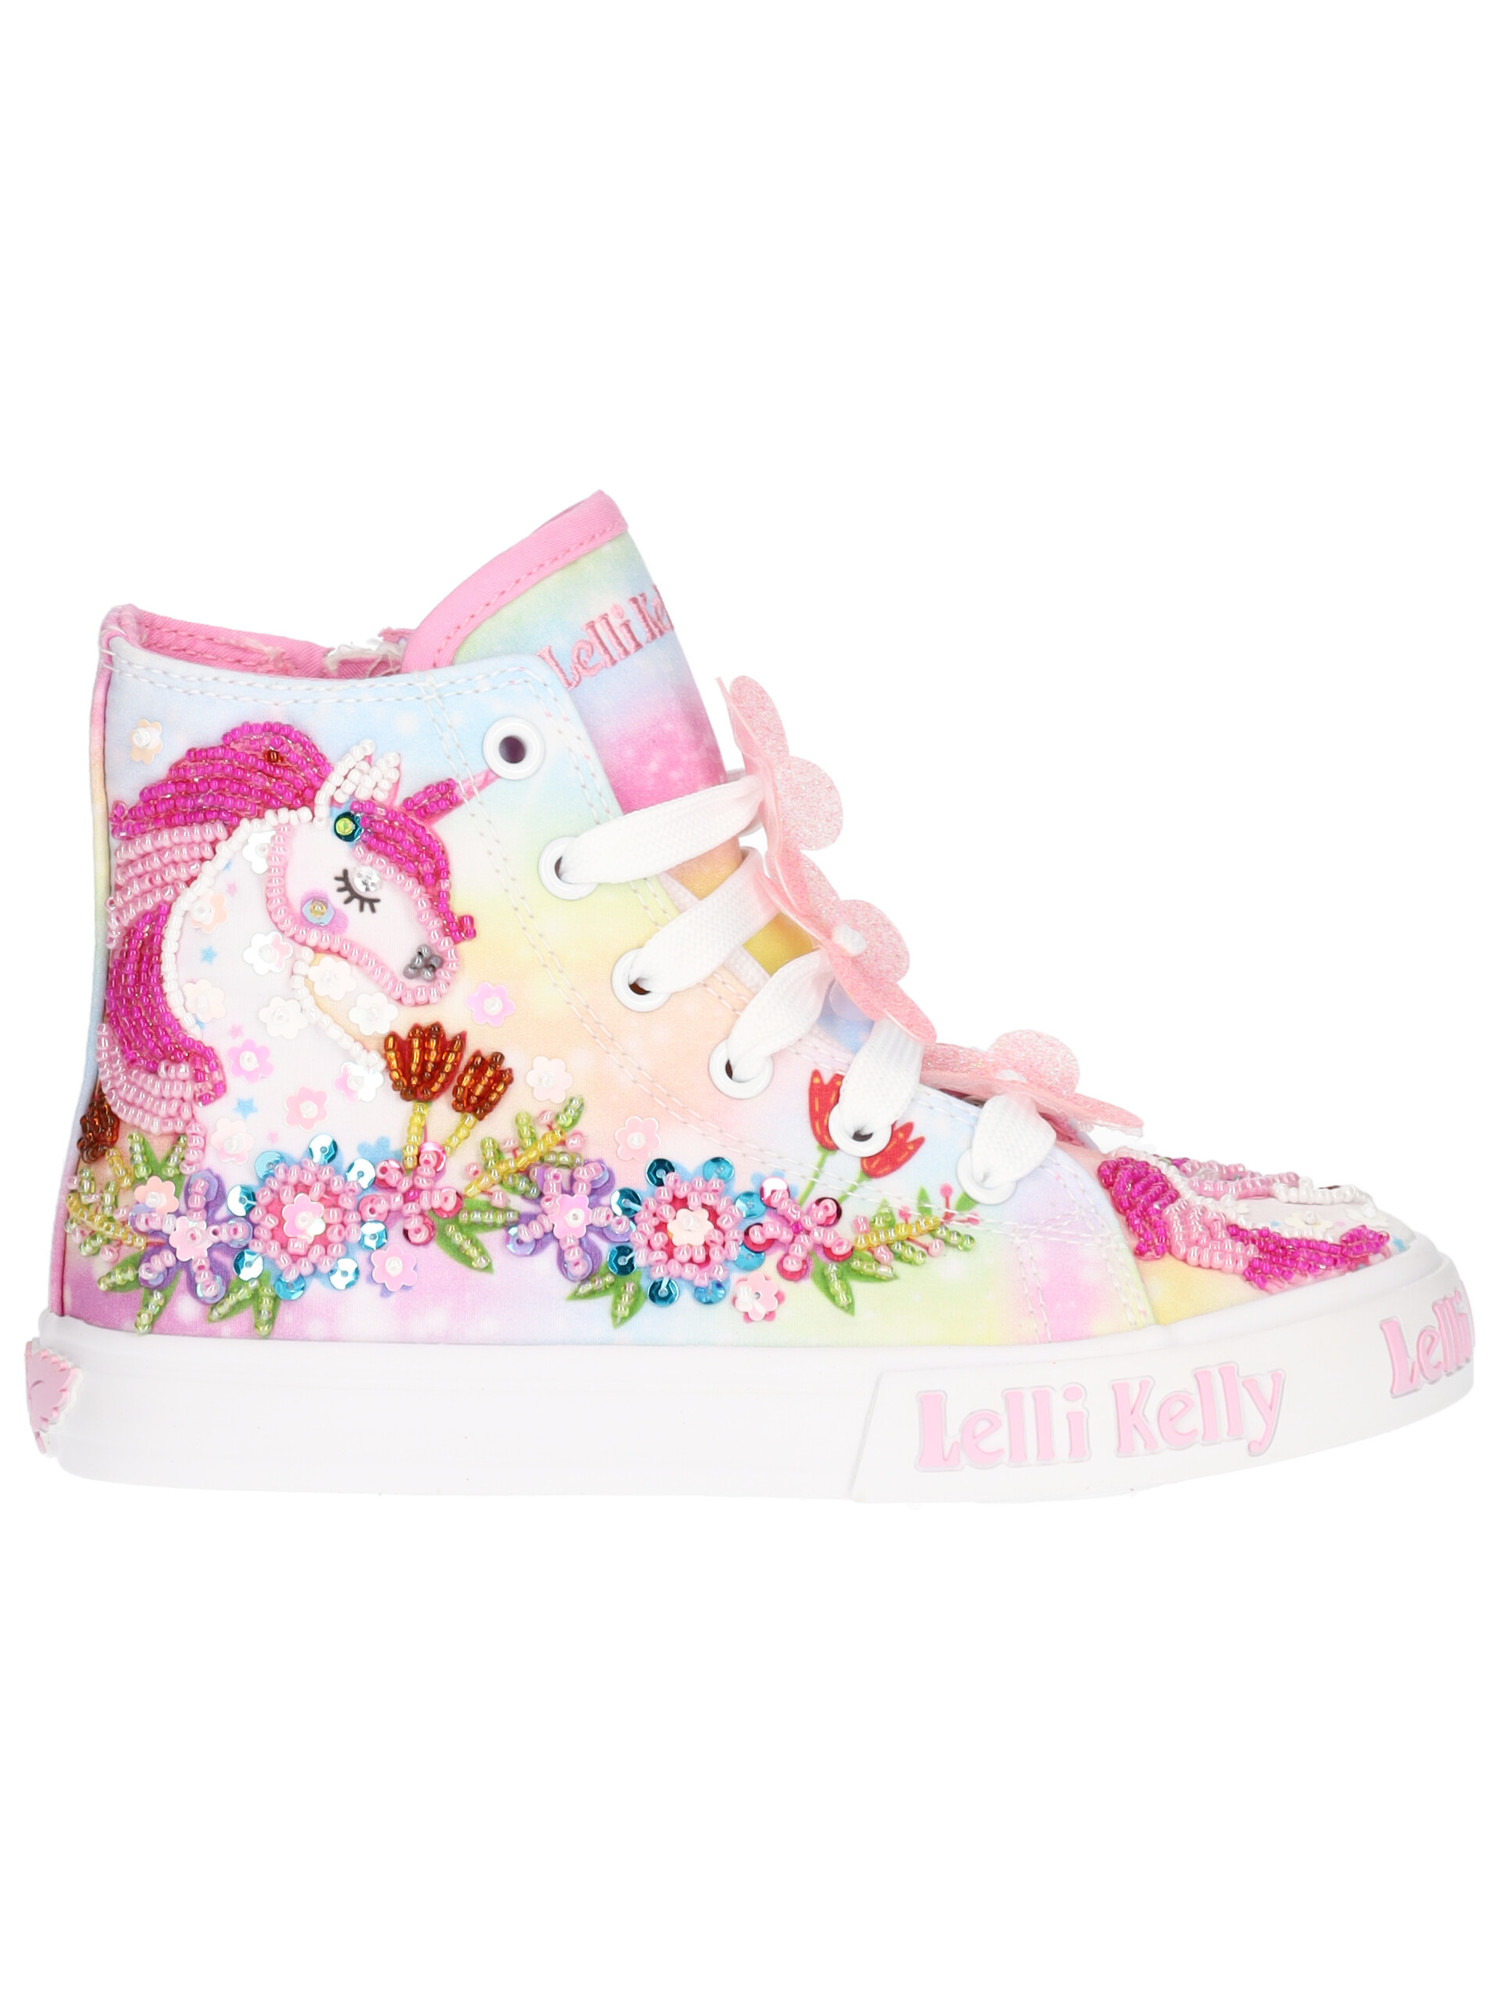 sneaker-alta-lelli-kelly-unicorno-da-bambina-bianca